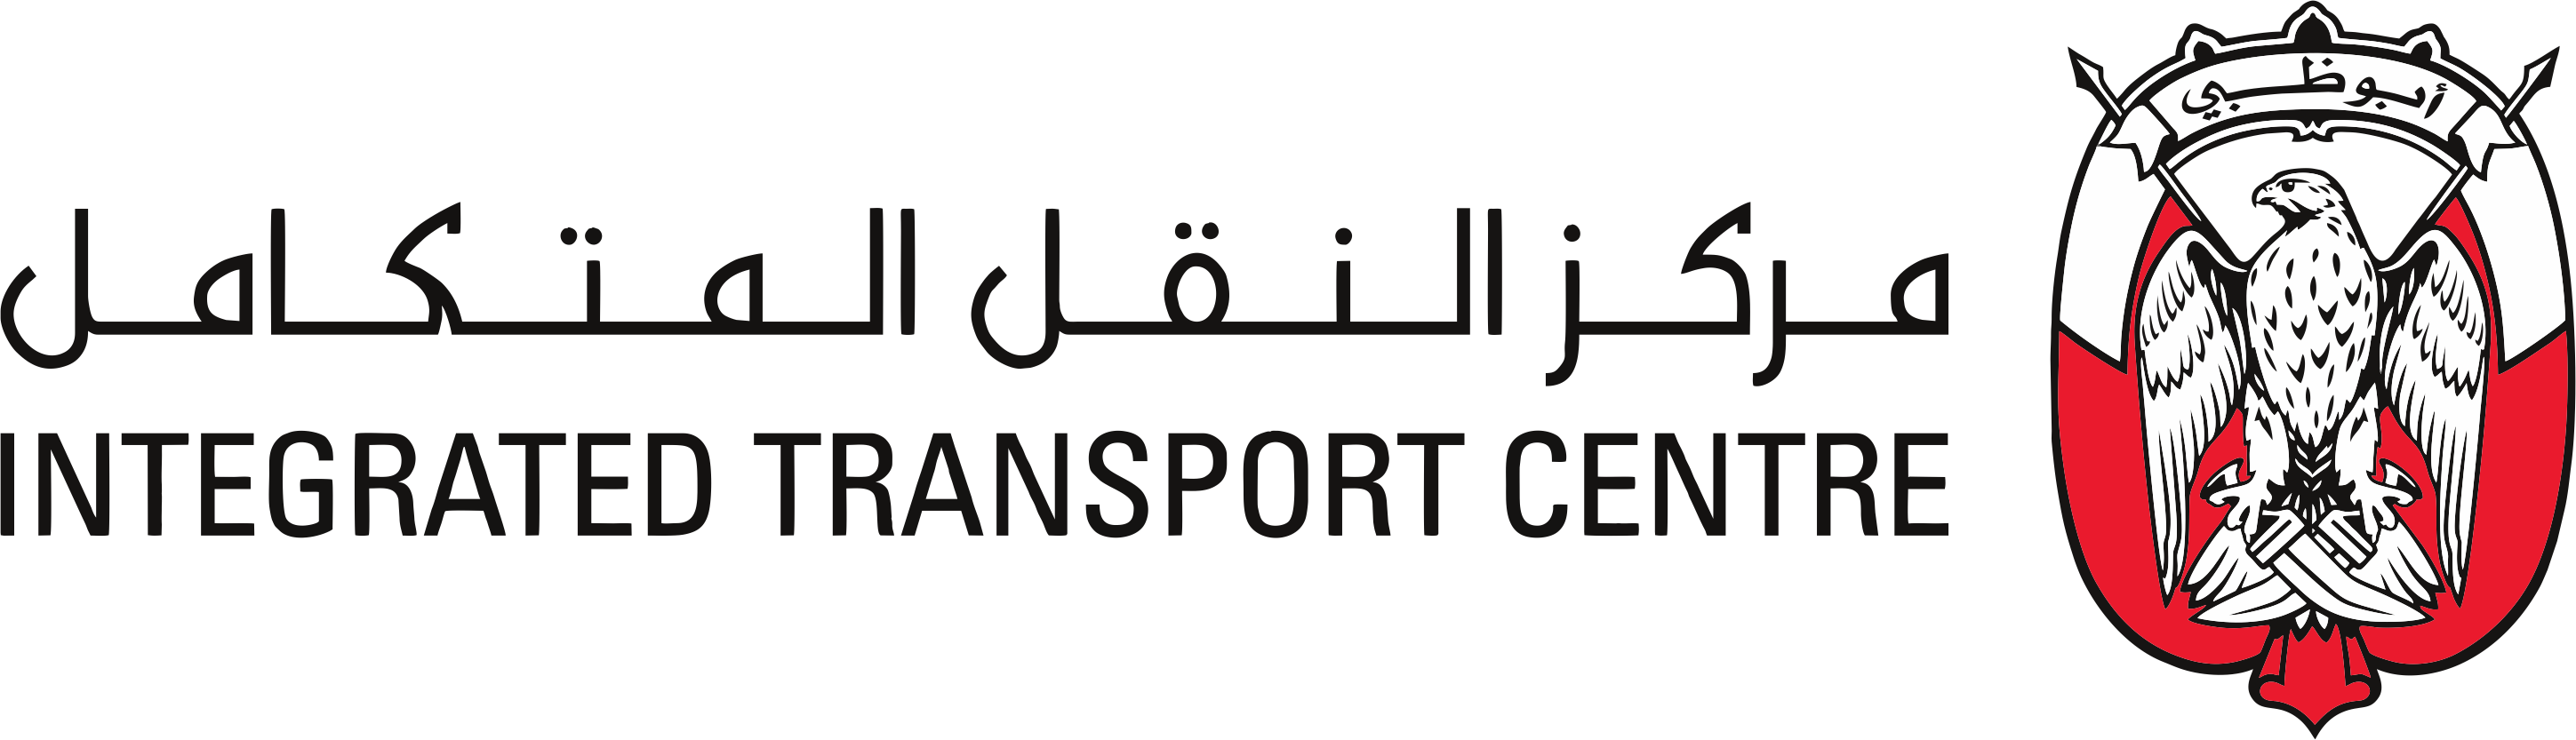 Integrated Transport Centre